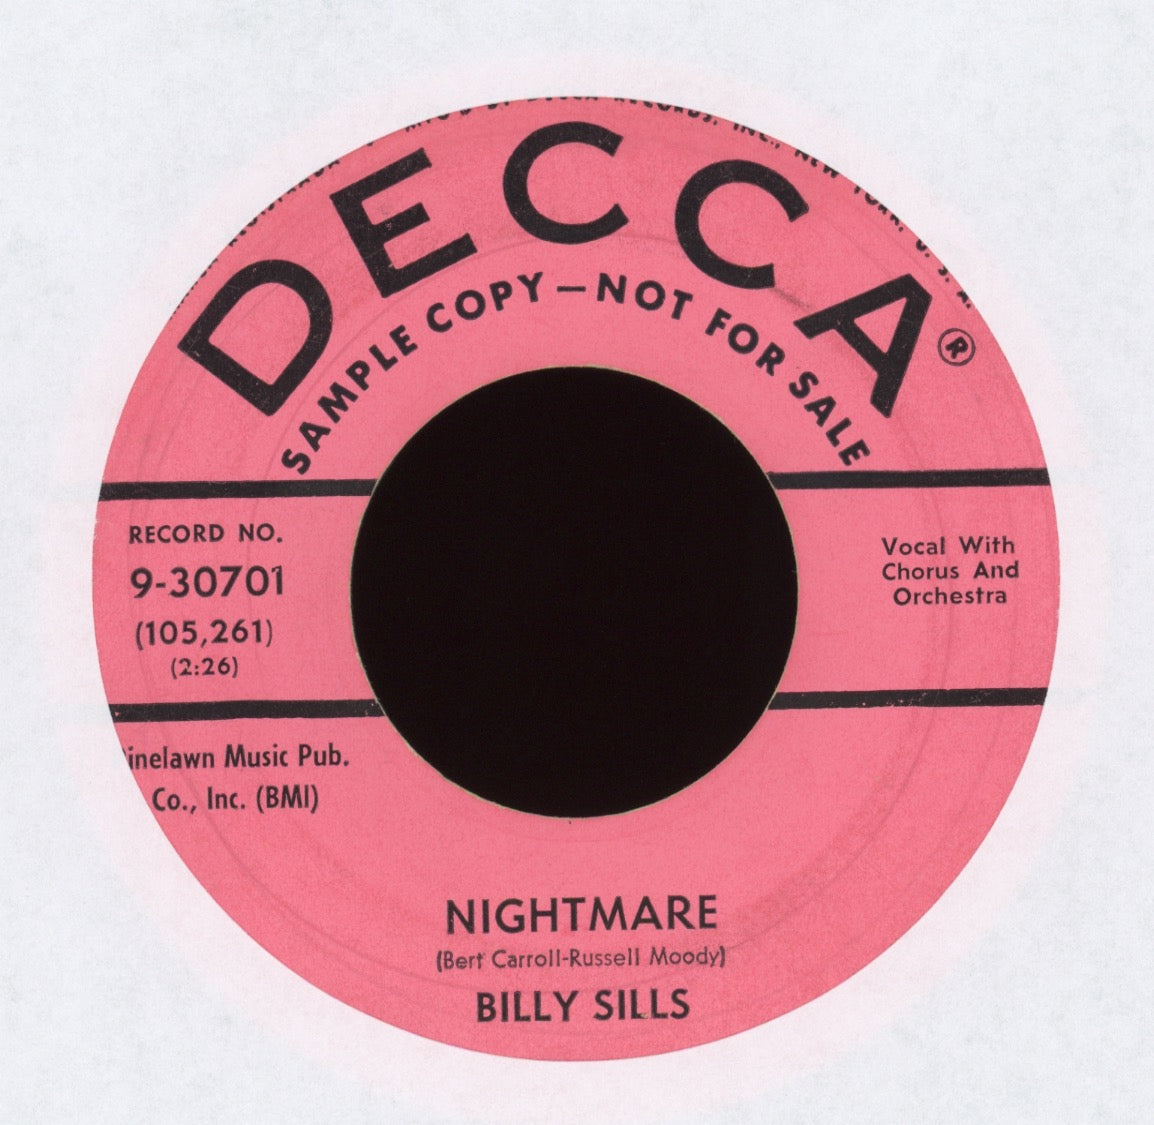 Billy Sills - Nightmare on Decca Promo